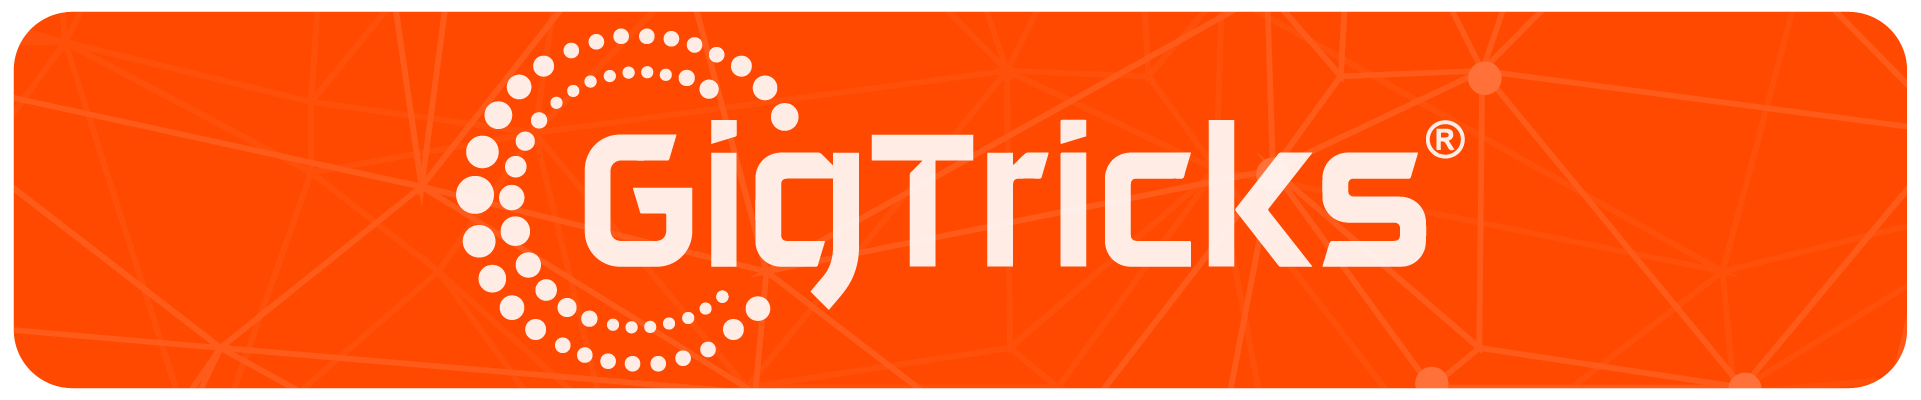 GigTricks_Logo.jpg